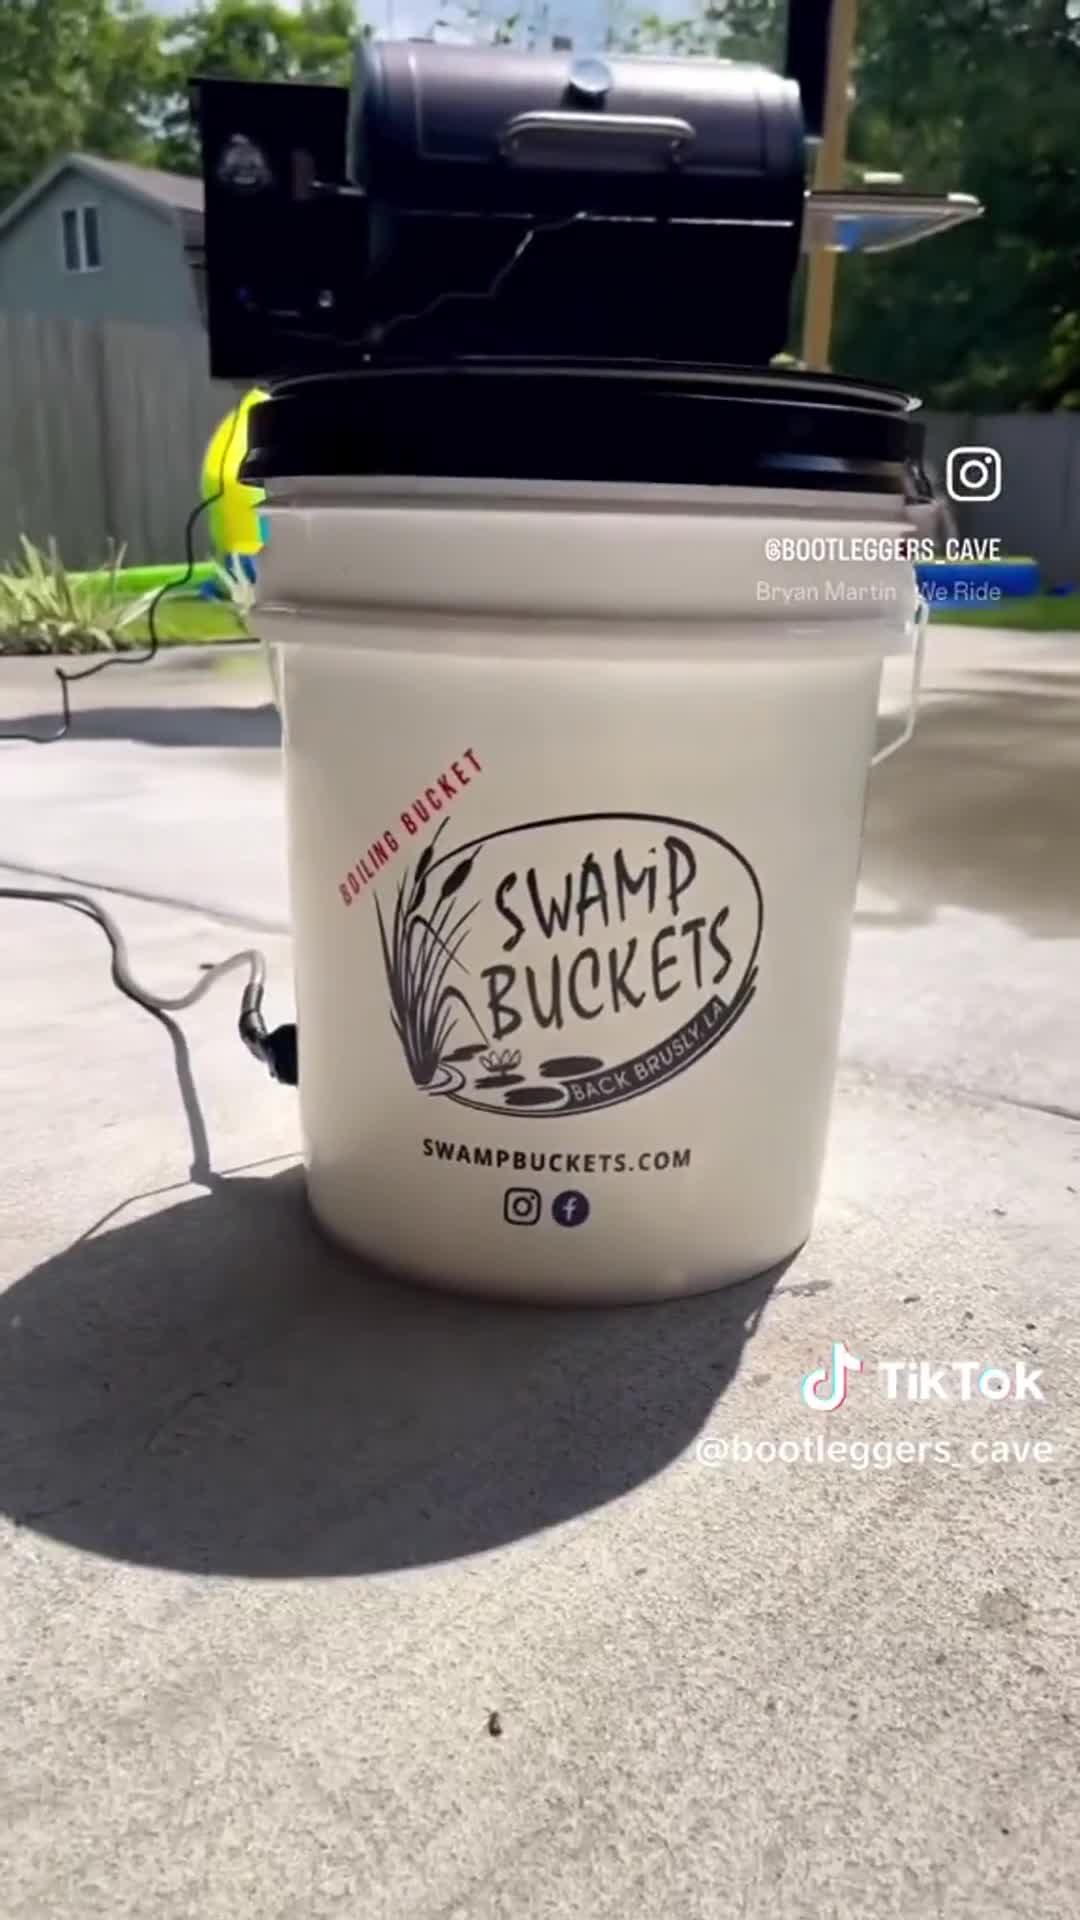 Swamp Buckets